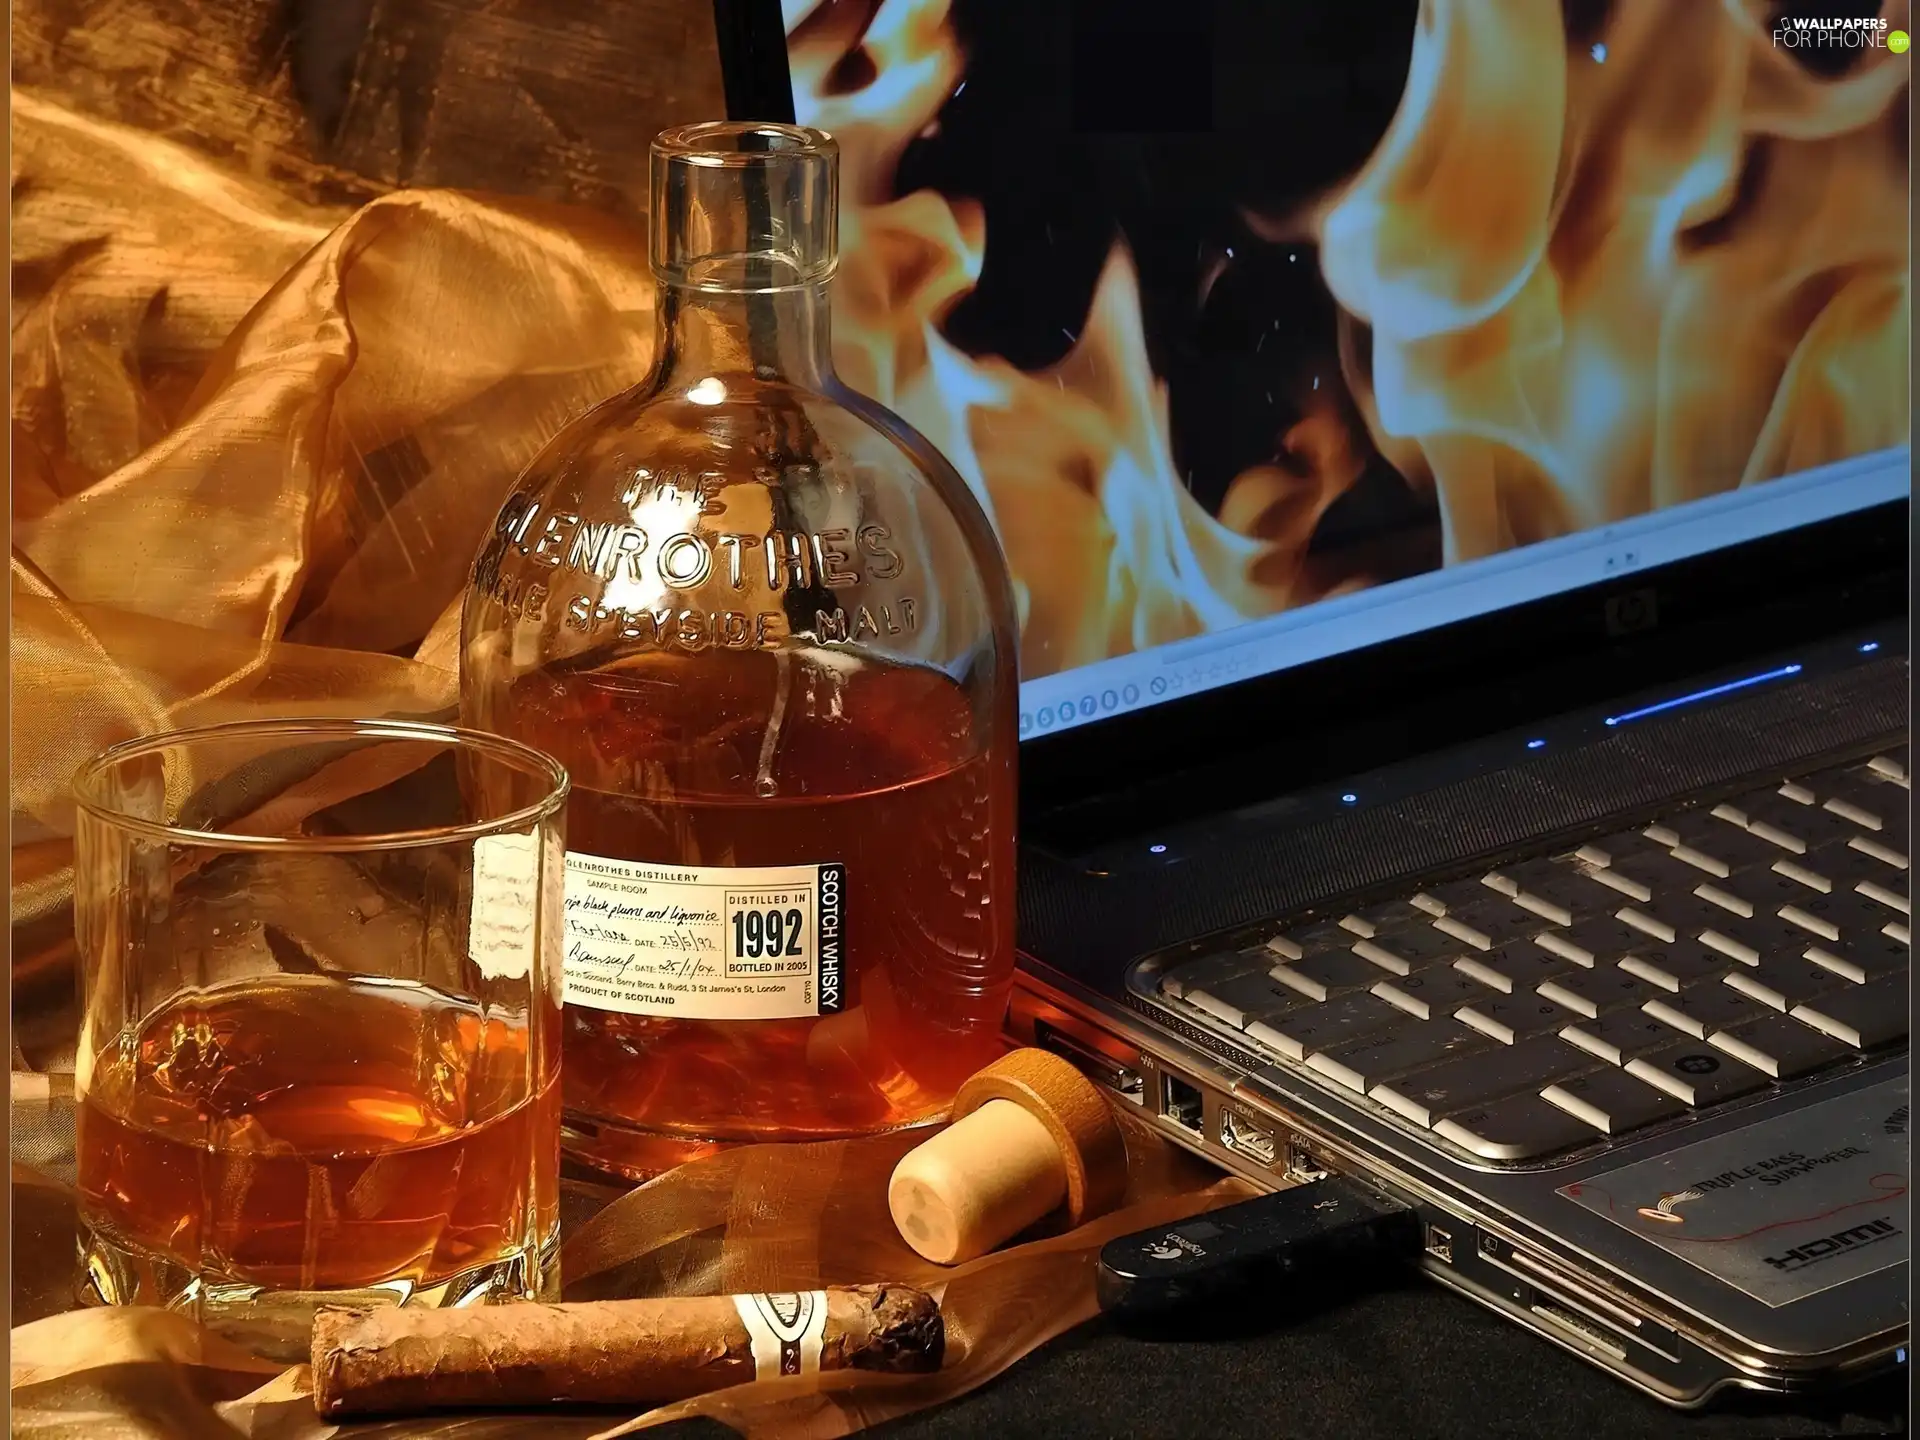 cigar, laptop, Bottle, cognac, A glass